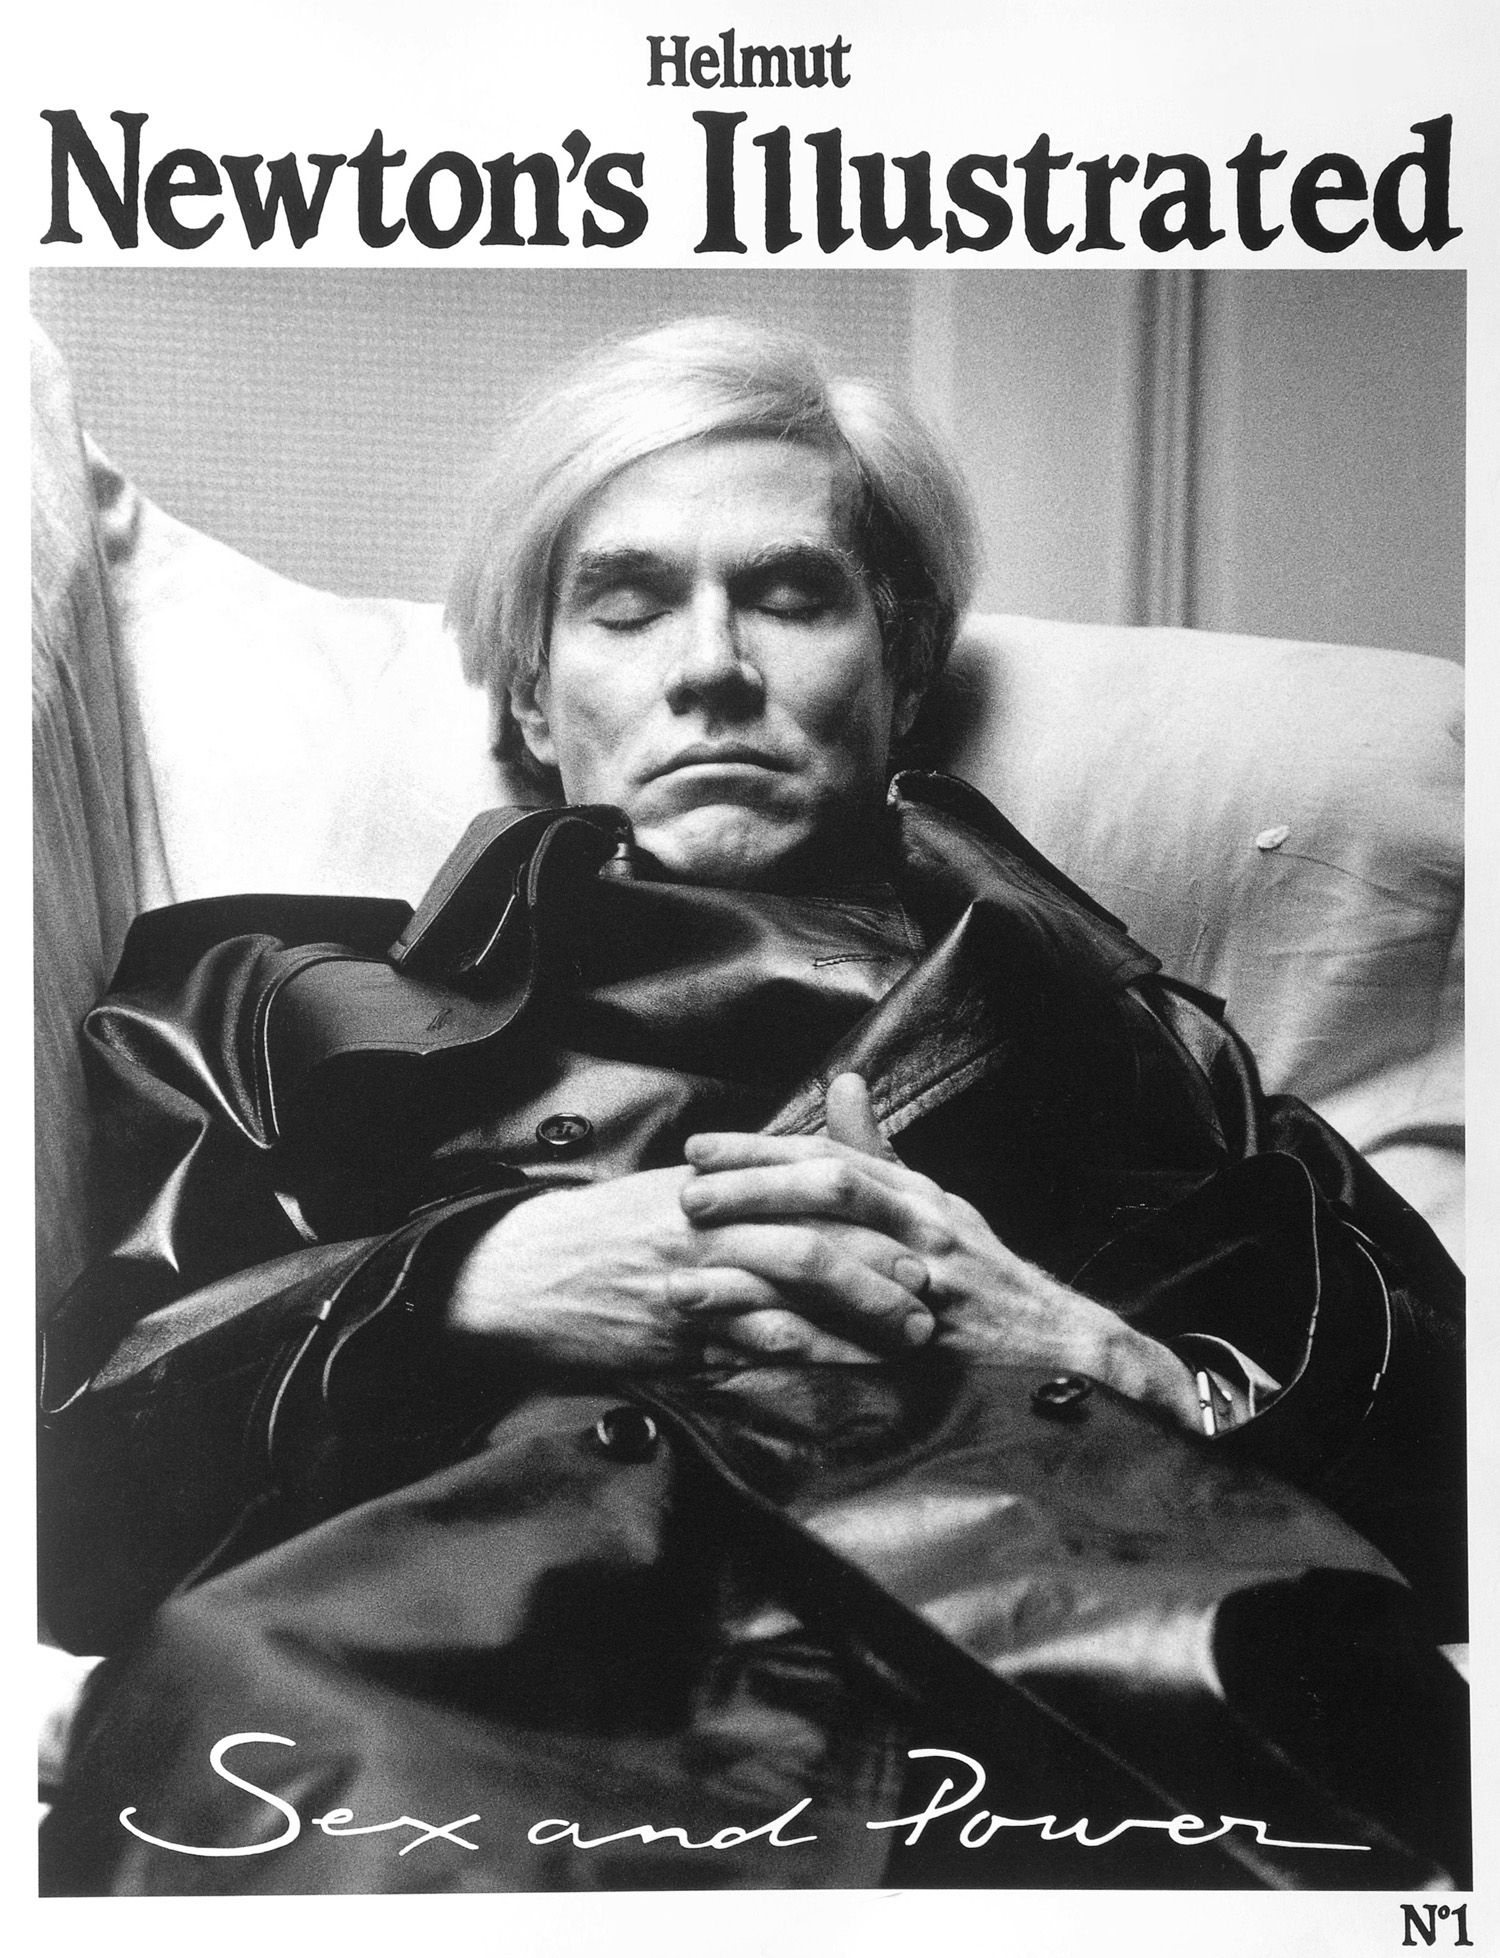 Helmut Newton, Andy Warhol, celebrity